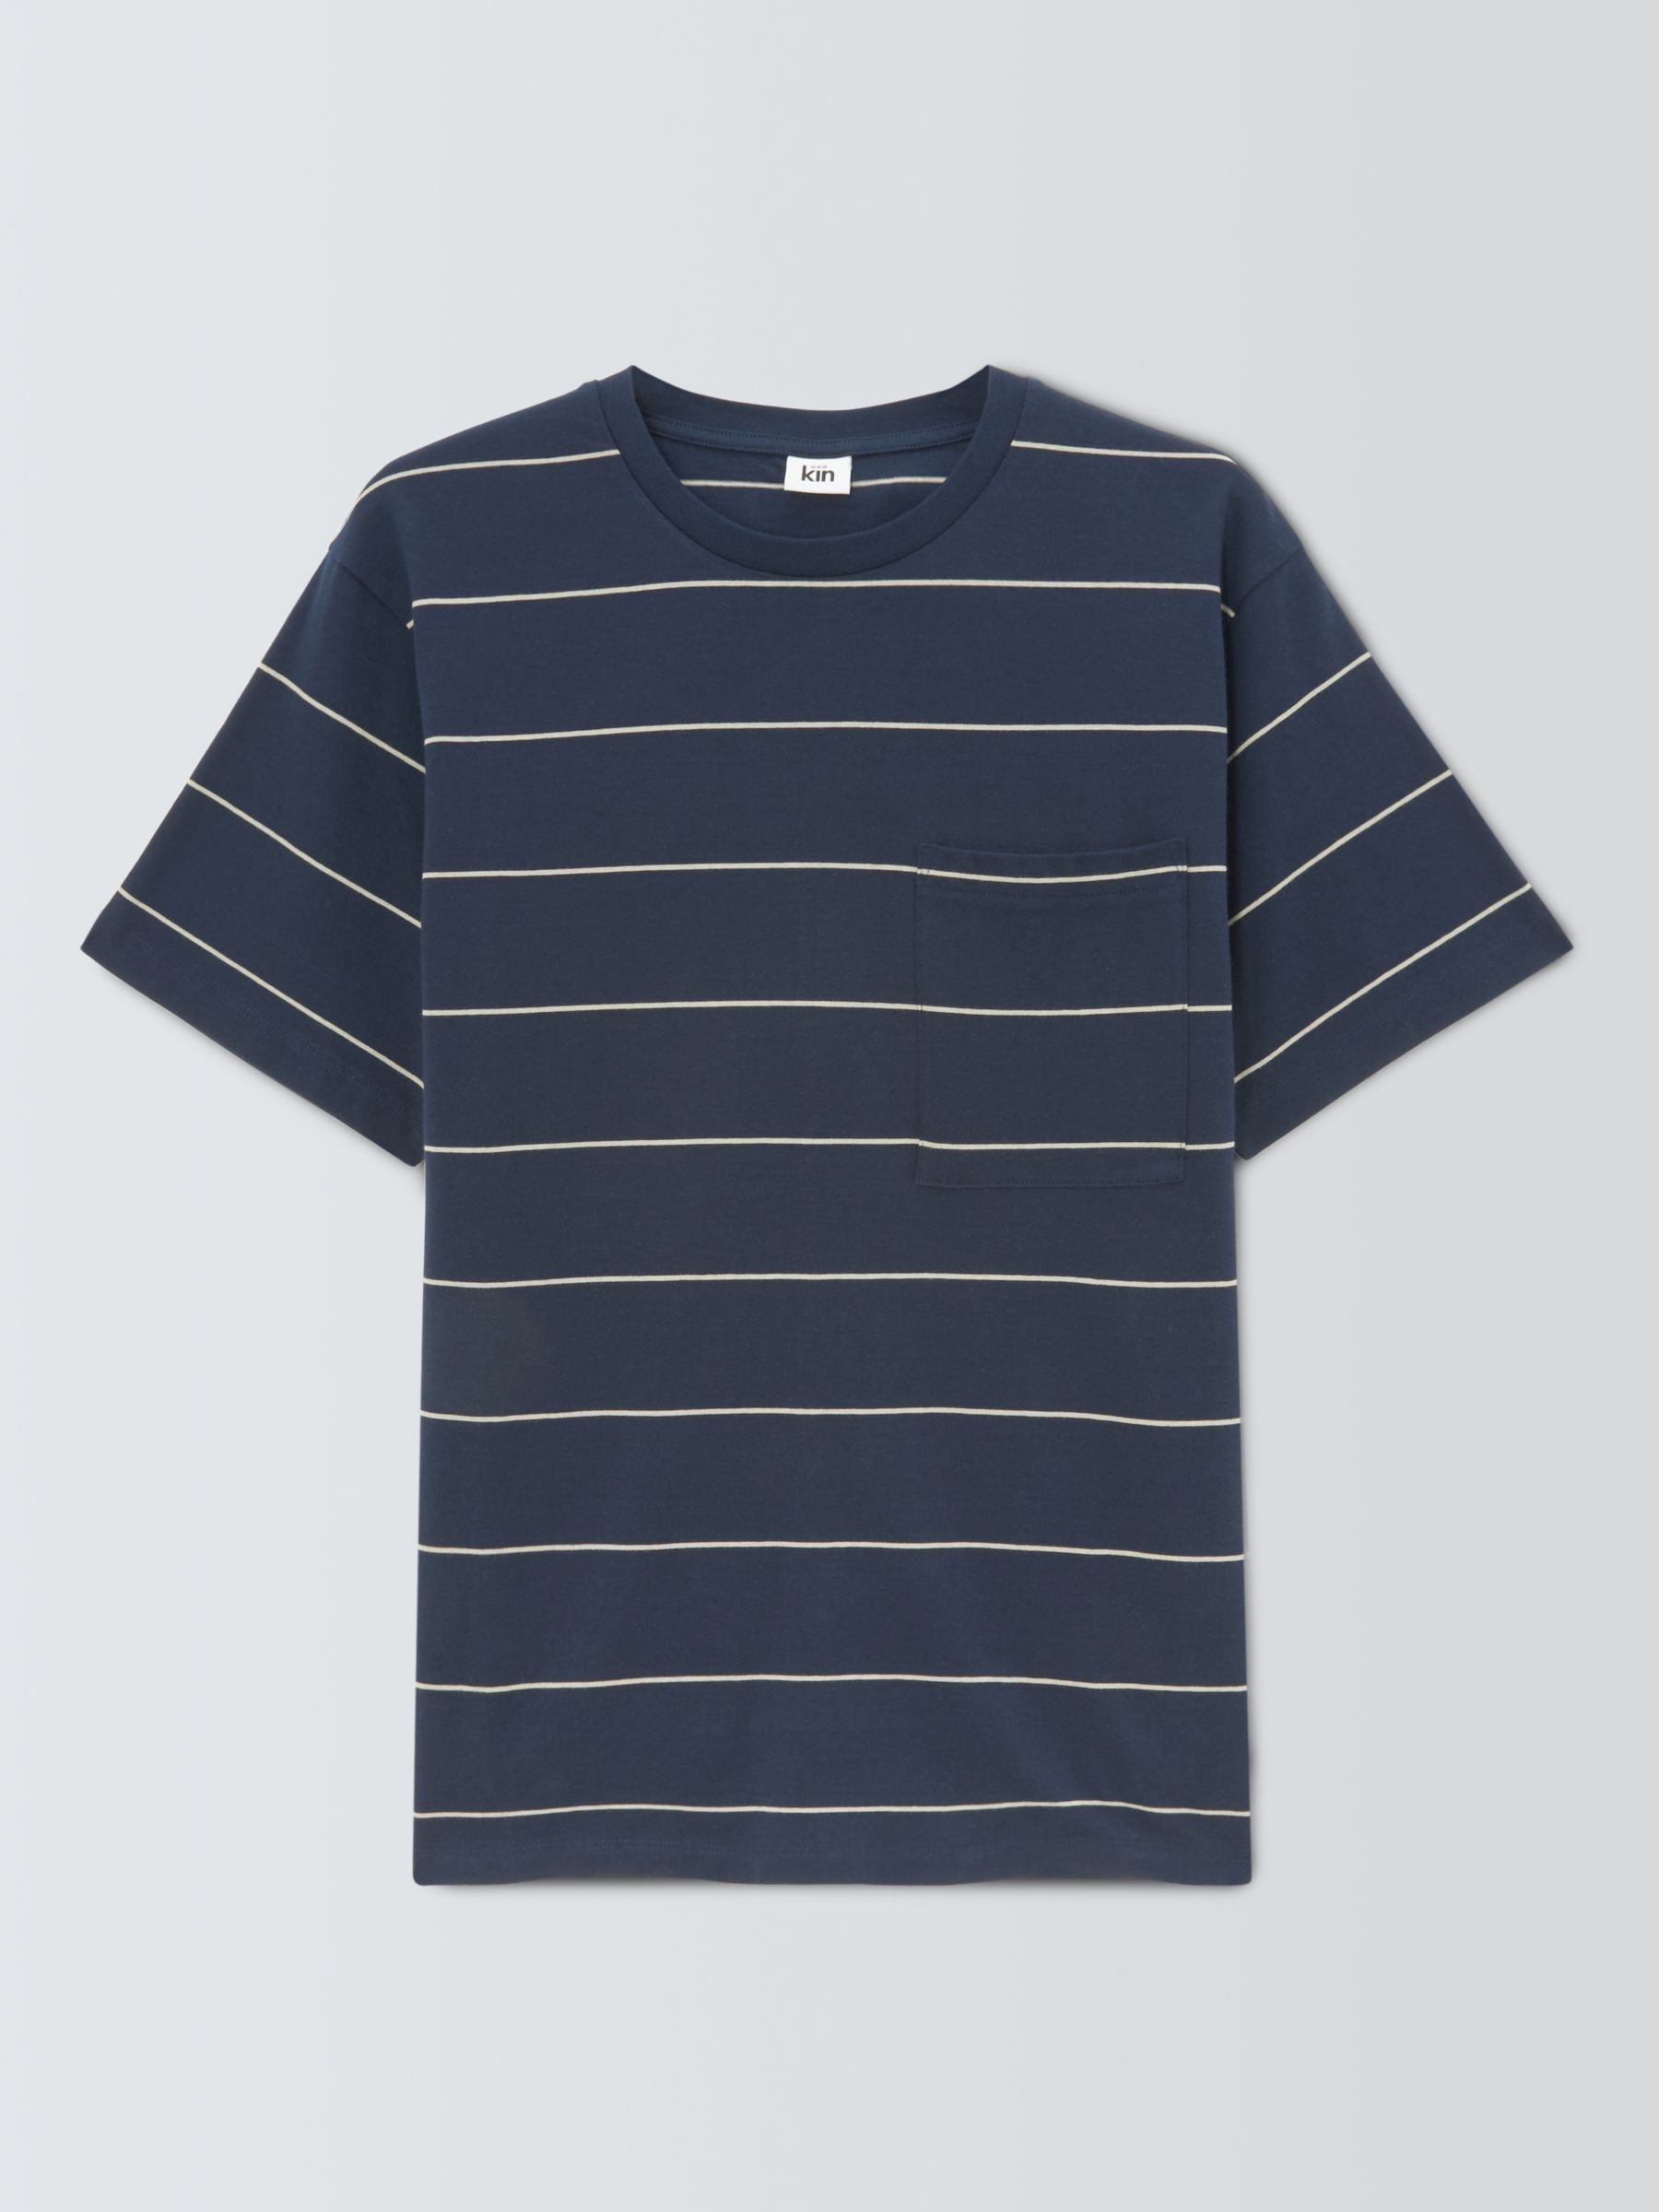 Kin Space Stripe Pocket Short Sleeve T-Shirt, Navy/Yellow, L